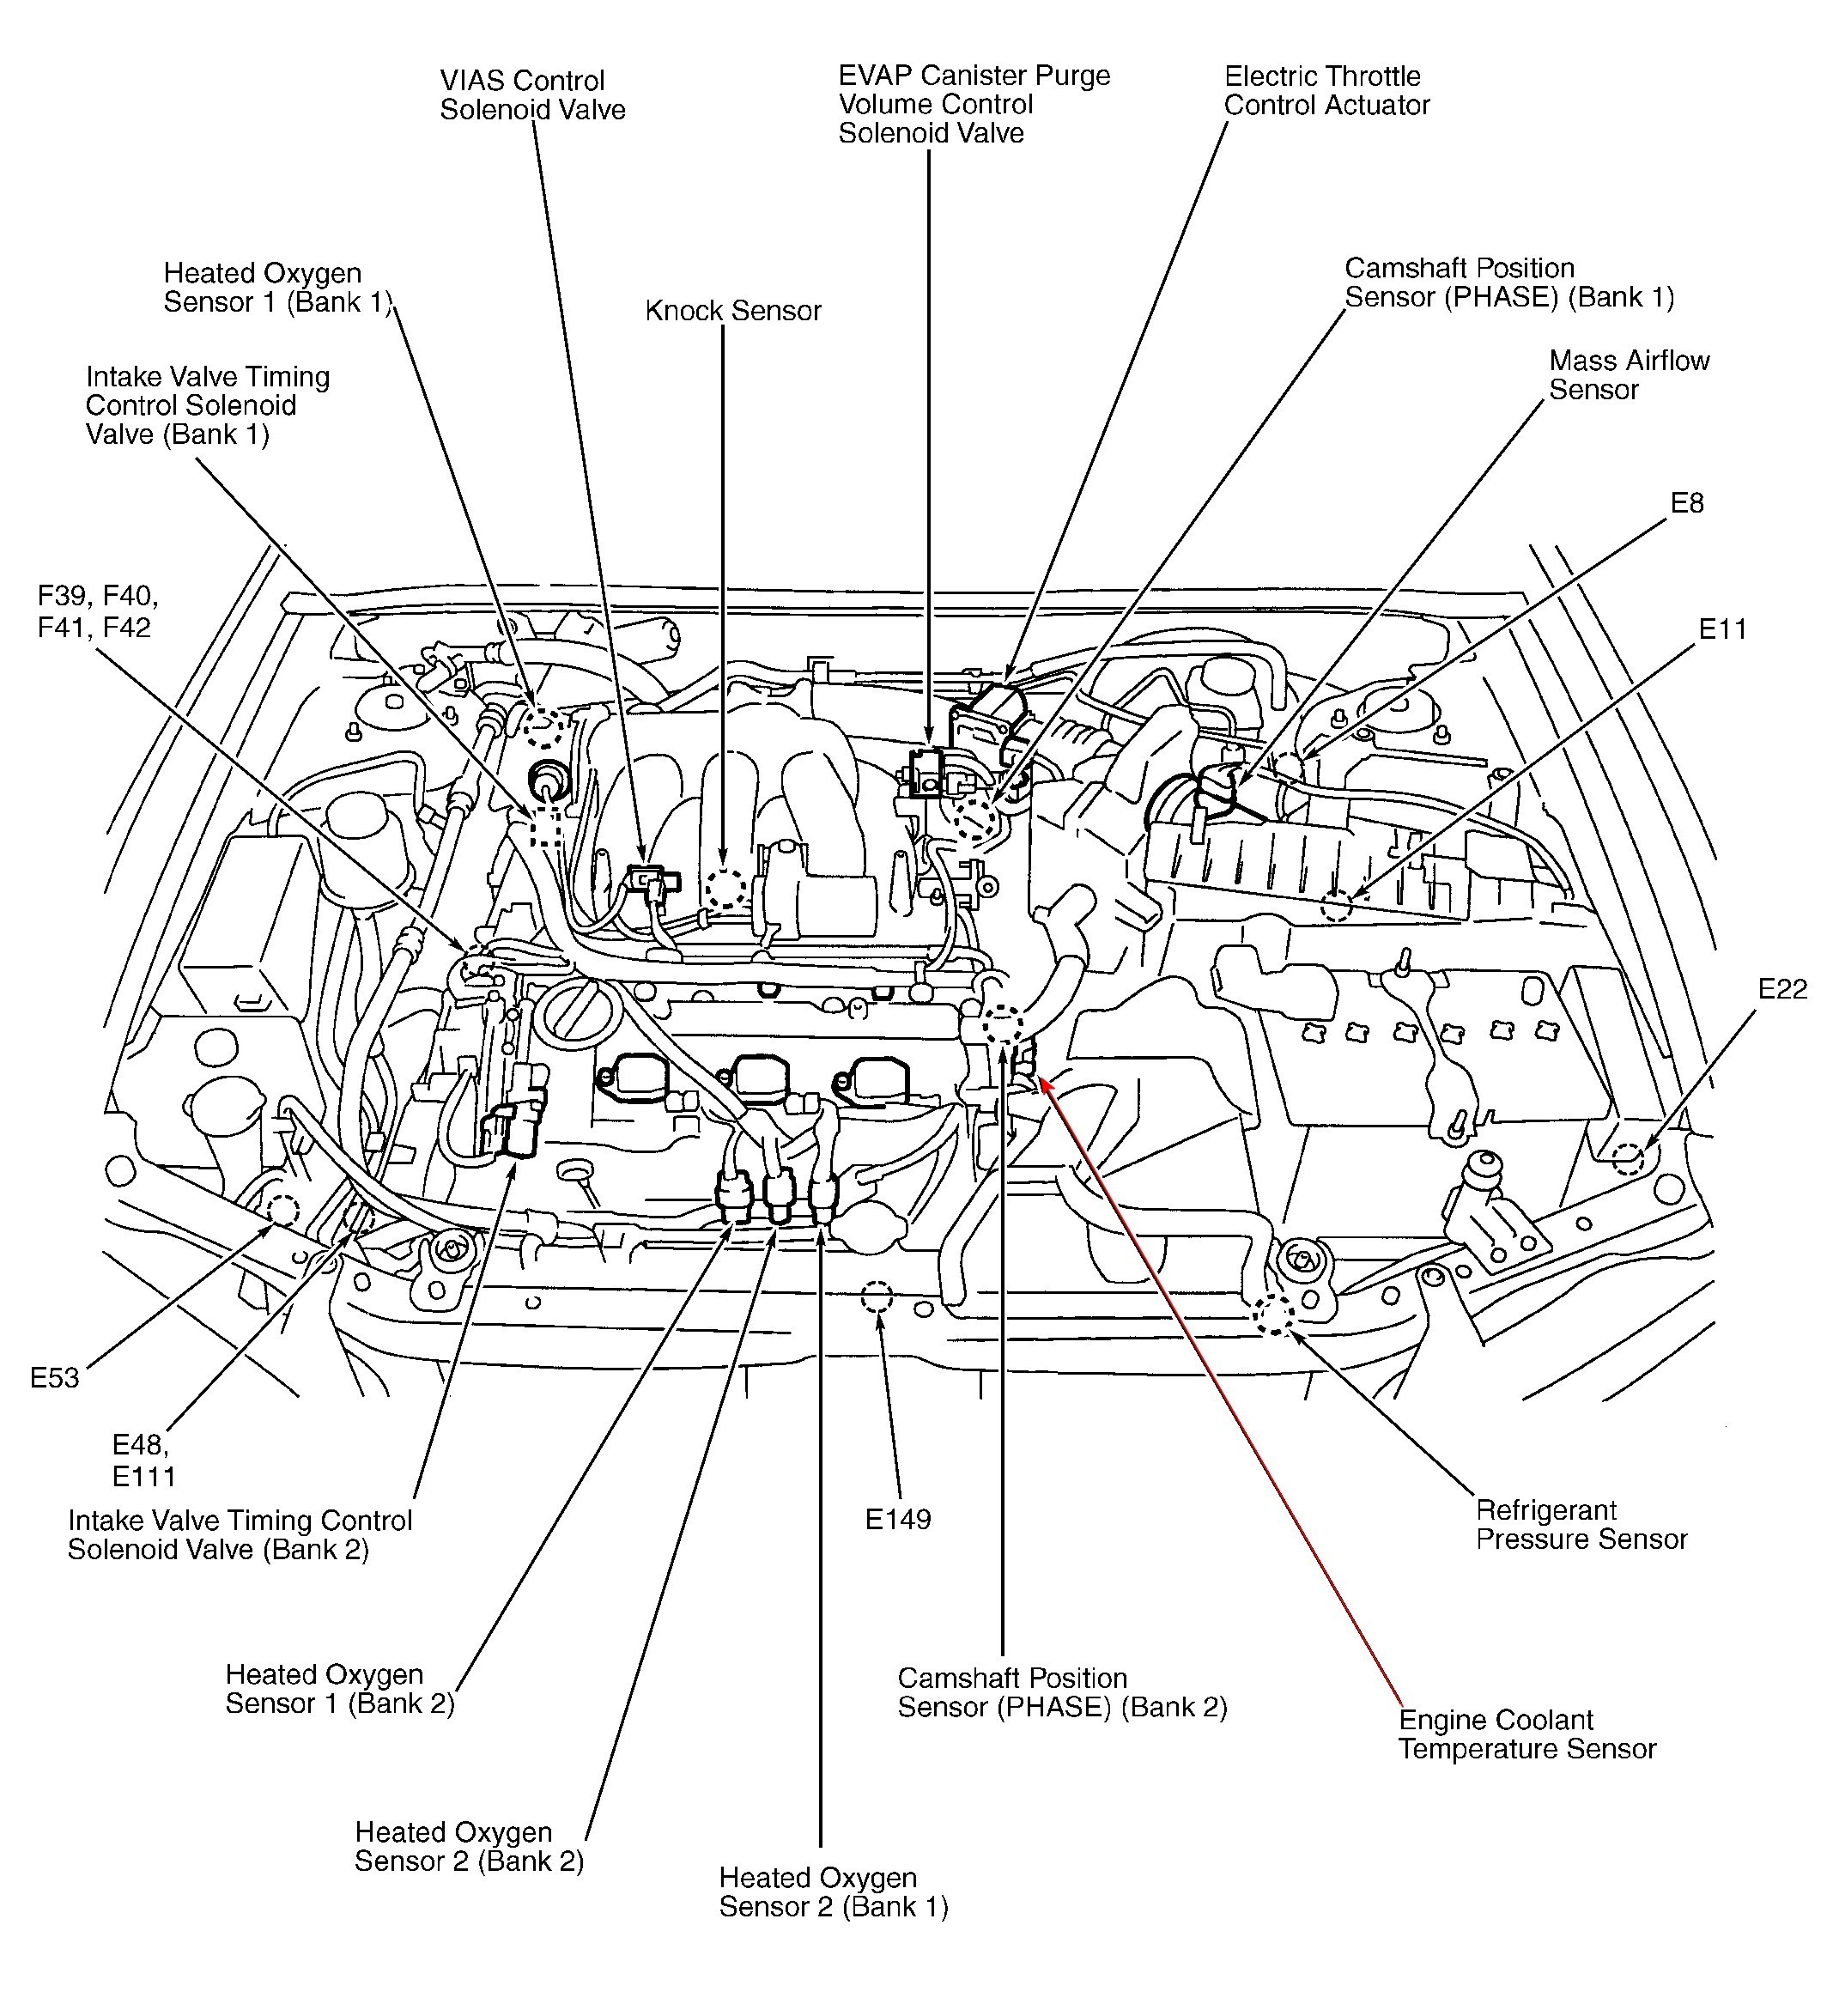 Diagram Of Under the Hood Of A Car Car Parts Labeled Diagram Car Parts Diagram Under Hood Car Of Diagram Of Under the Hood Of A Car